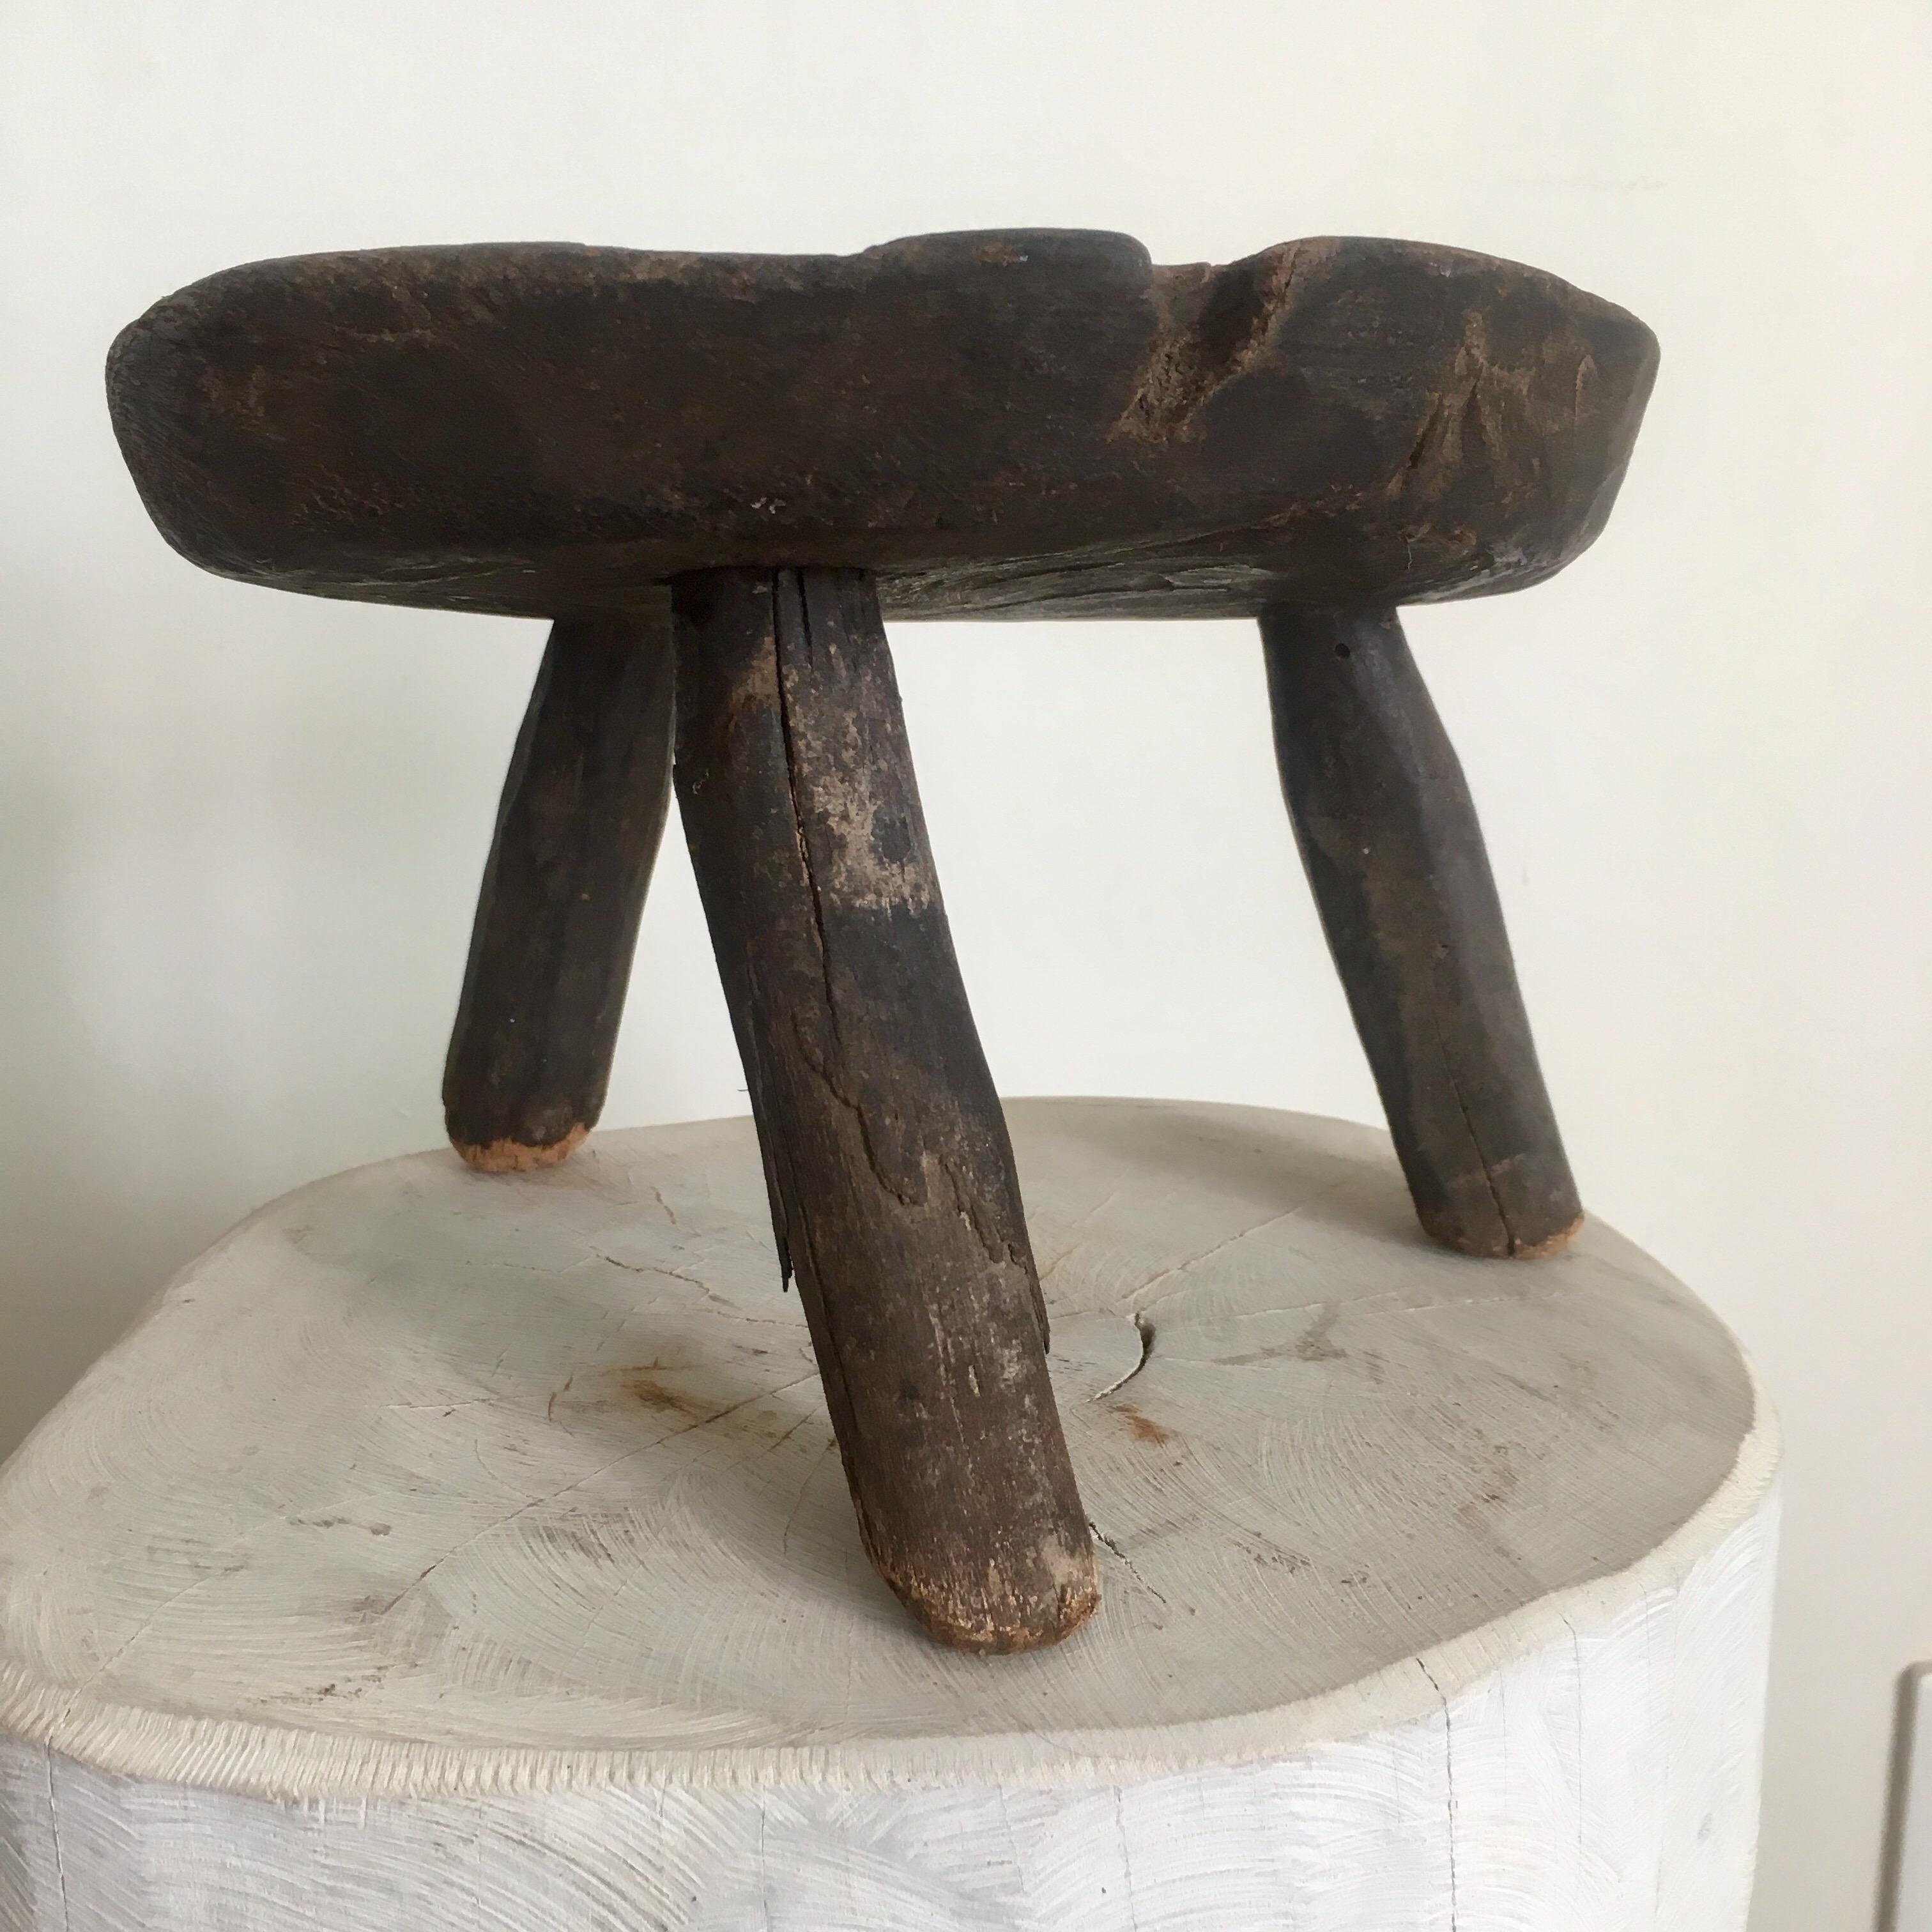 Child's mesquite stool from the Sierra Gorda region of Guanajuato, Mexico.